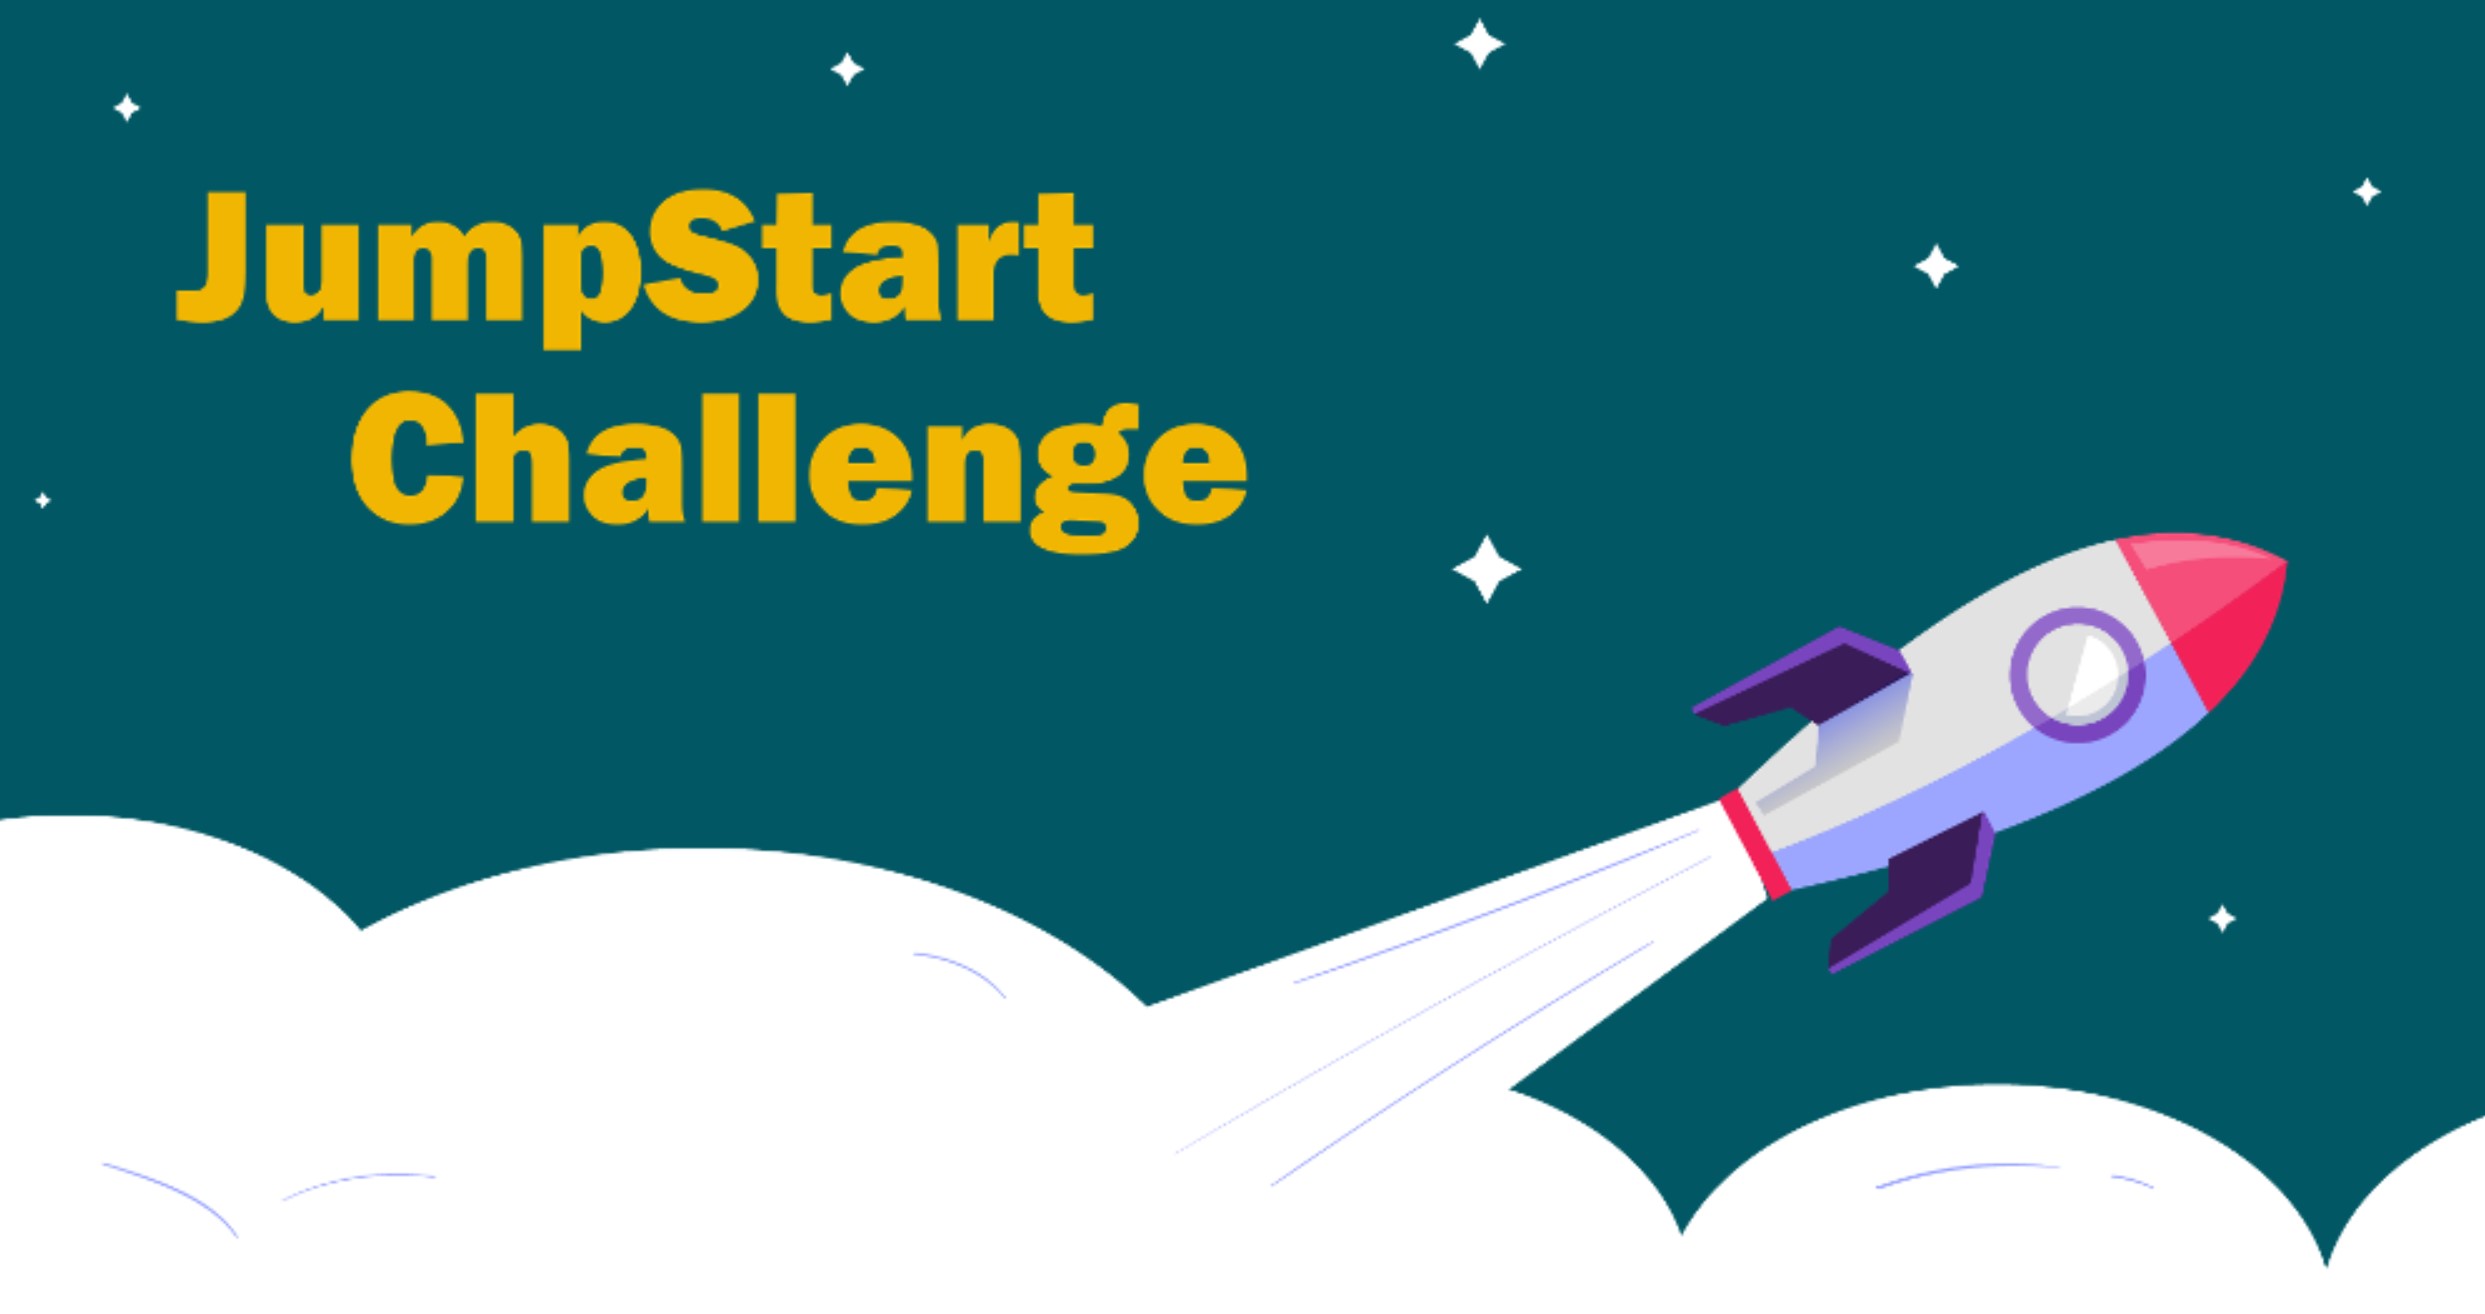 Jumpstart challenge